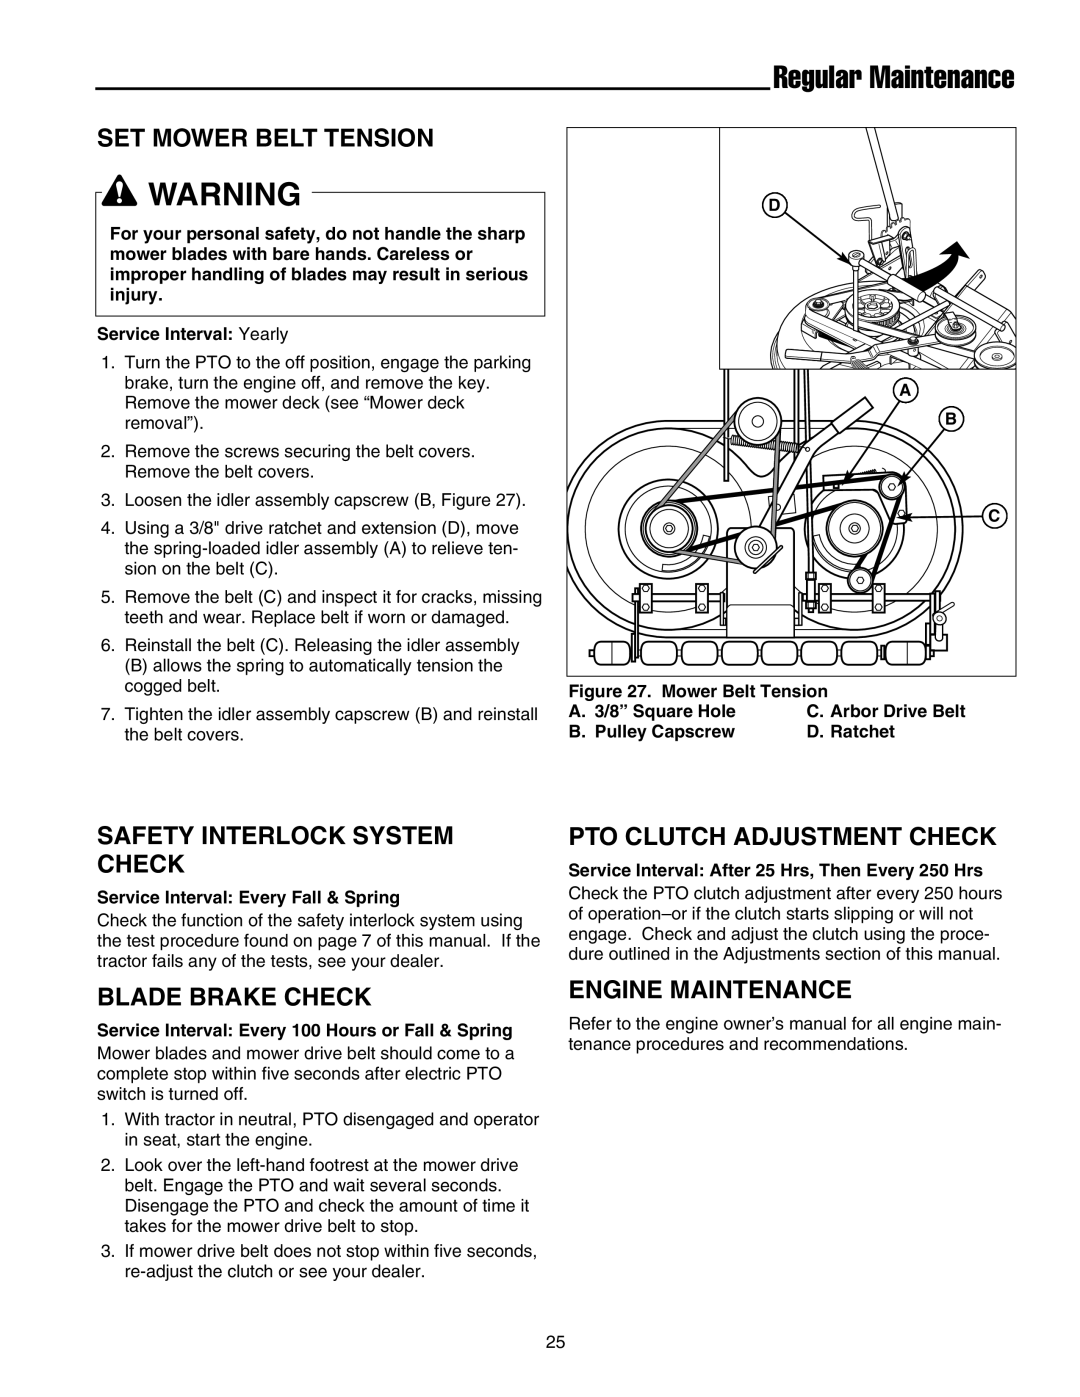 Snapper XL Series Set Mower Belt Tension, Safety Interlock System Check, Blade Brake Check, Pto Clutch Adjustment Check 